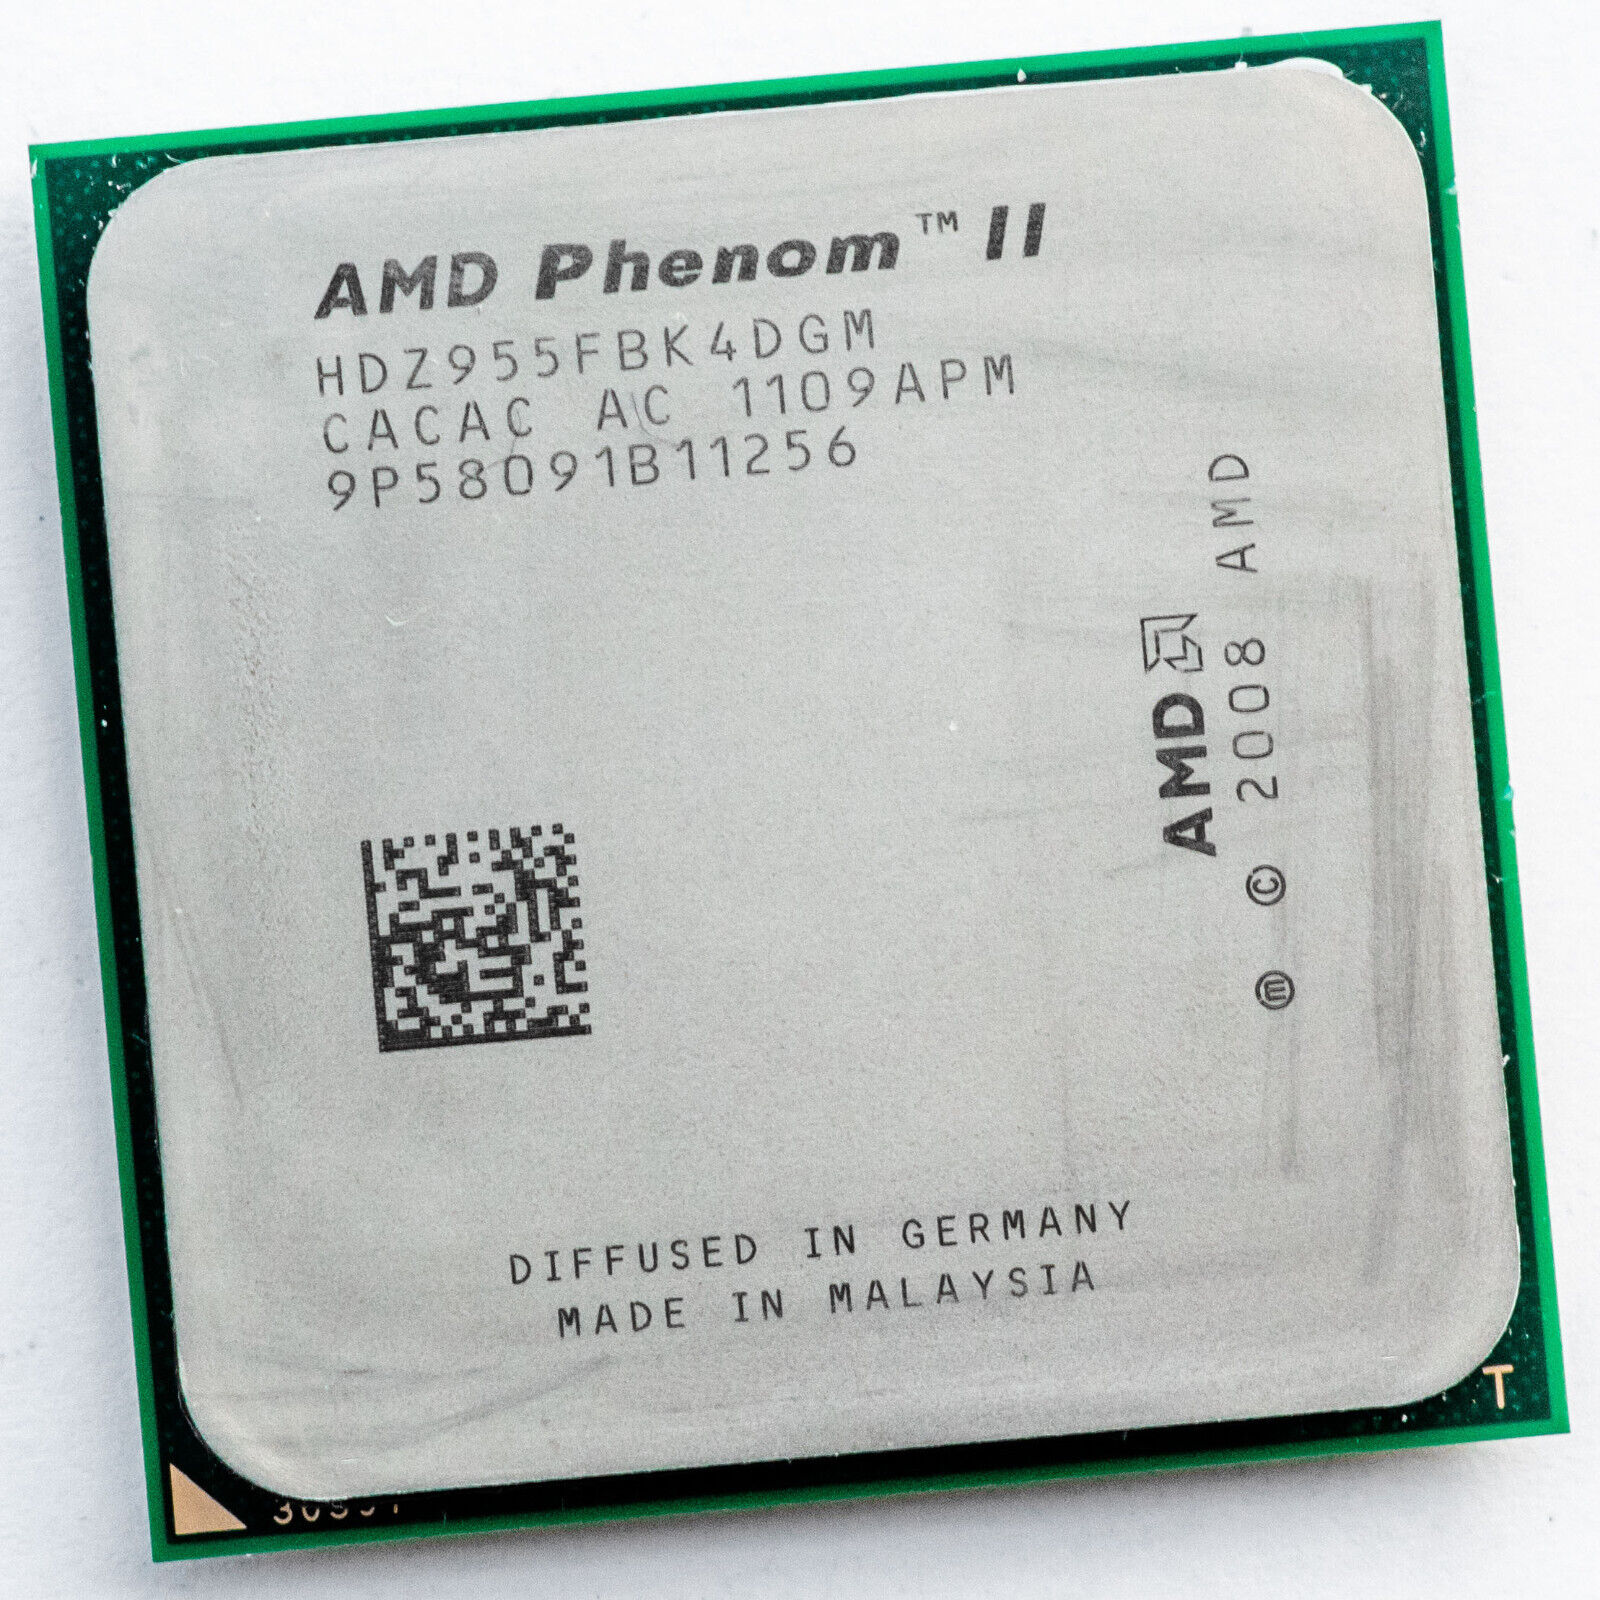 AMD Phenom II X4 955 HDX955WFK4DGM 3.2GHz Quad Core AM3 Processor Deneb 95W